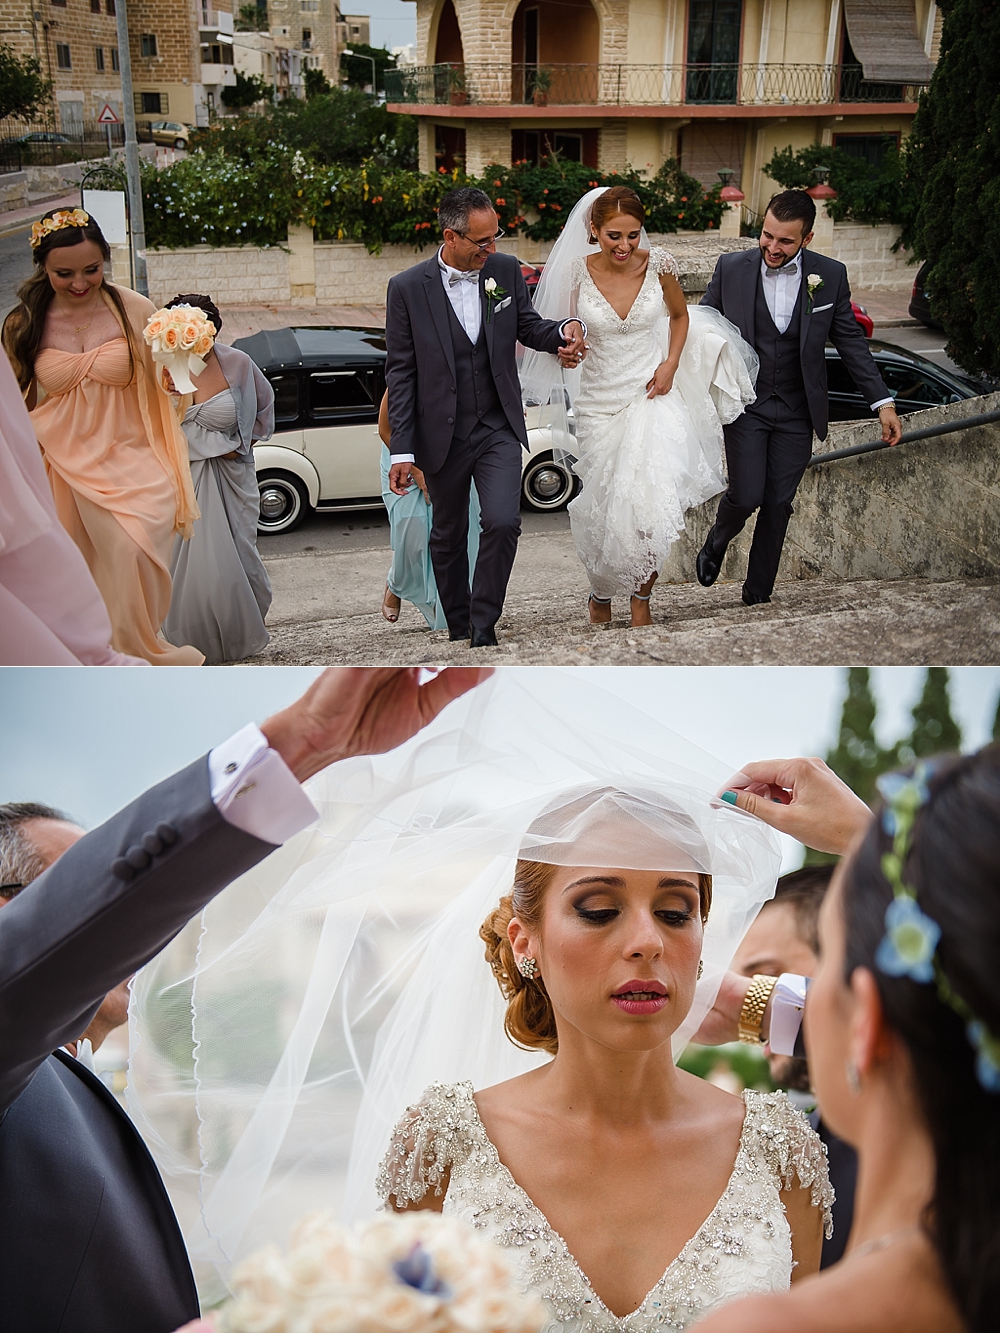 Gail & Shawn - Wedding Photography Malta - Villa Arrigo - Shane P. Watts Photography